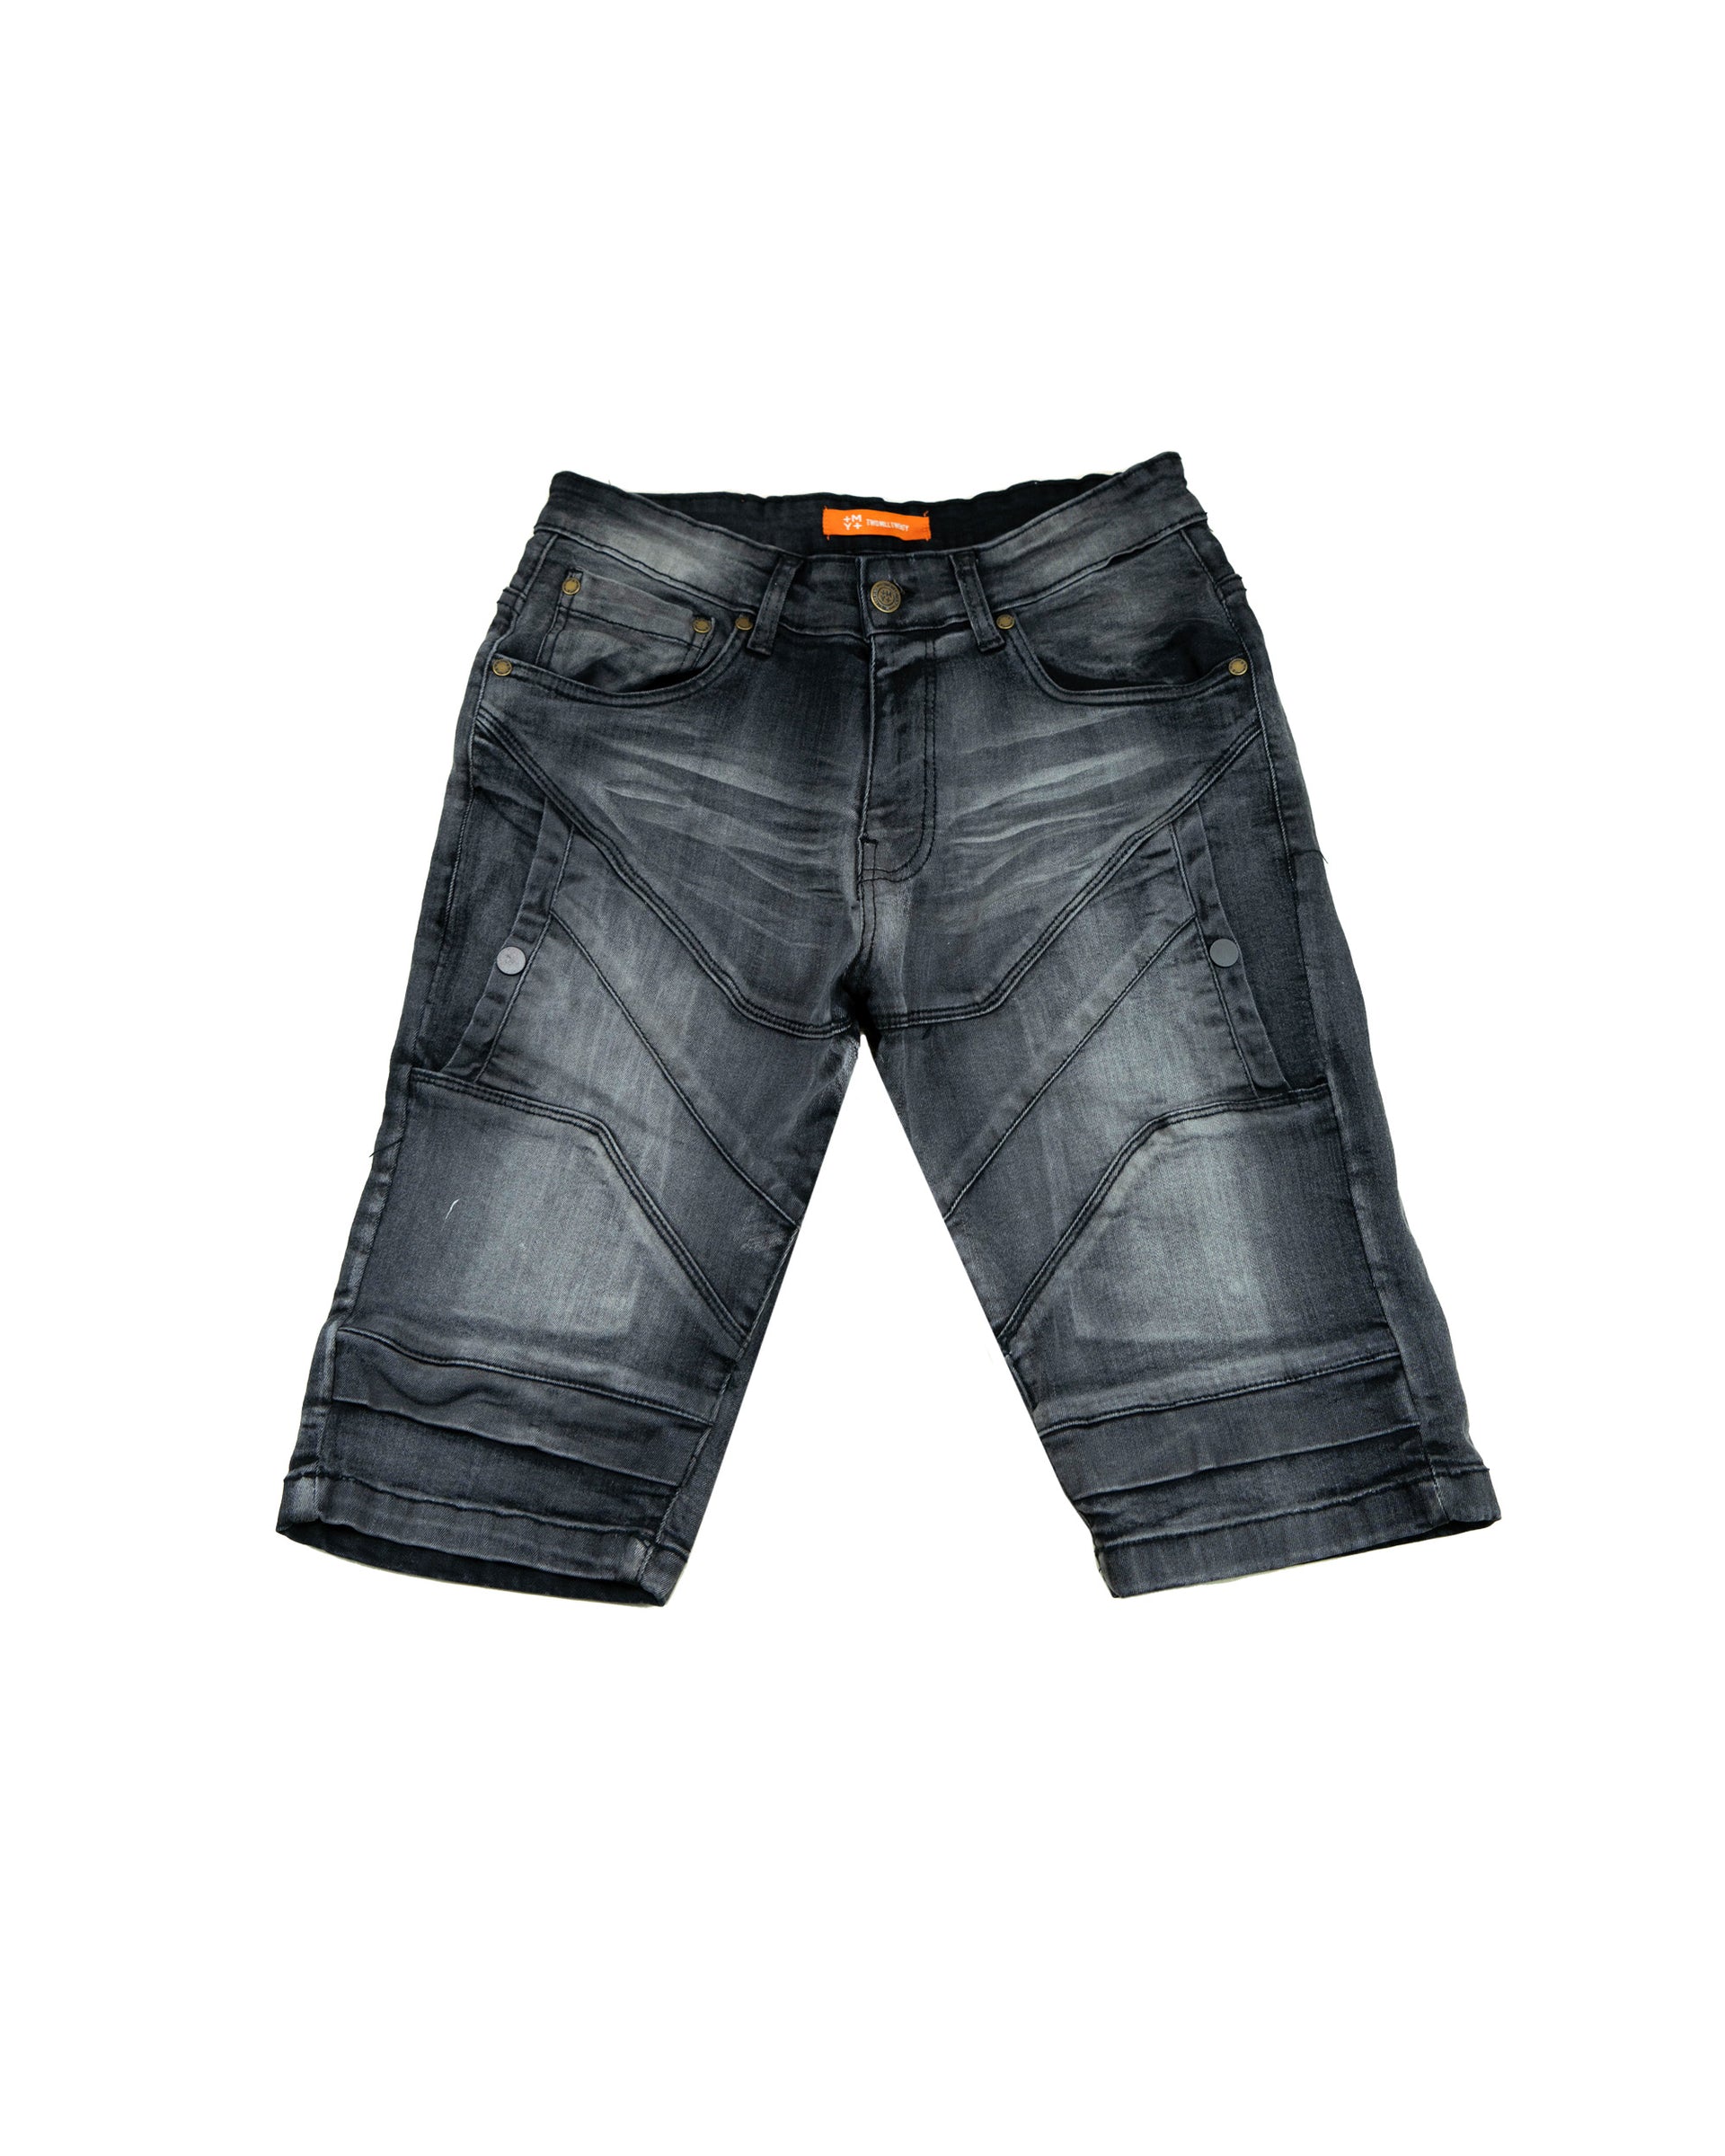 HARRISON | Men's Classic Fit Carpenter Style Distressed Denim Jean Shorts in Black Asphalt